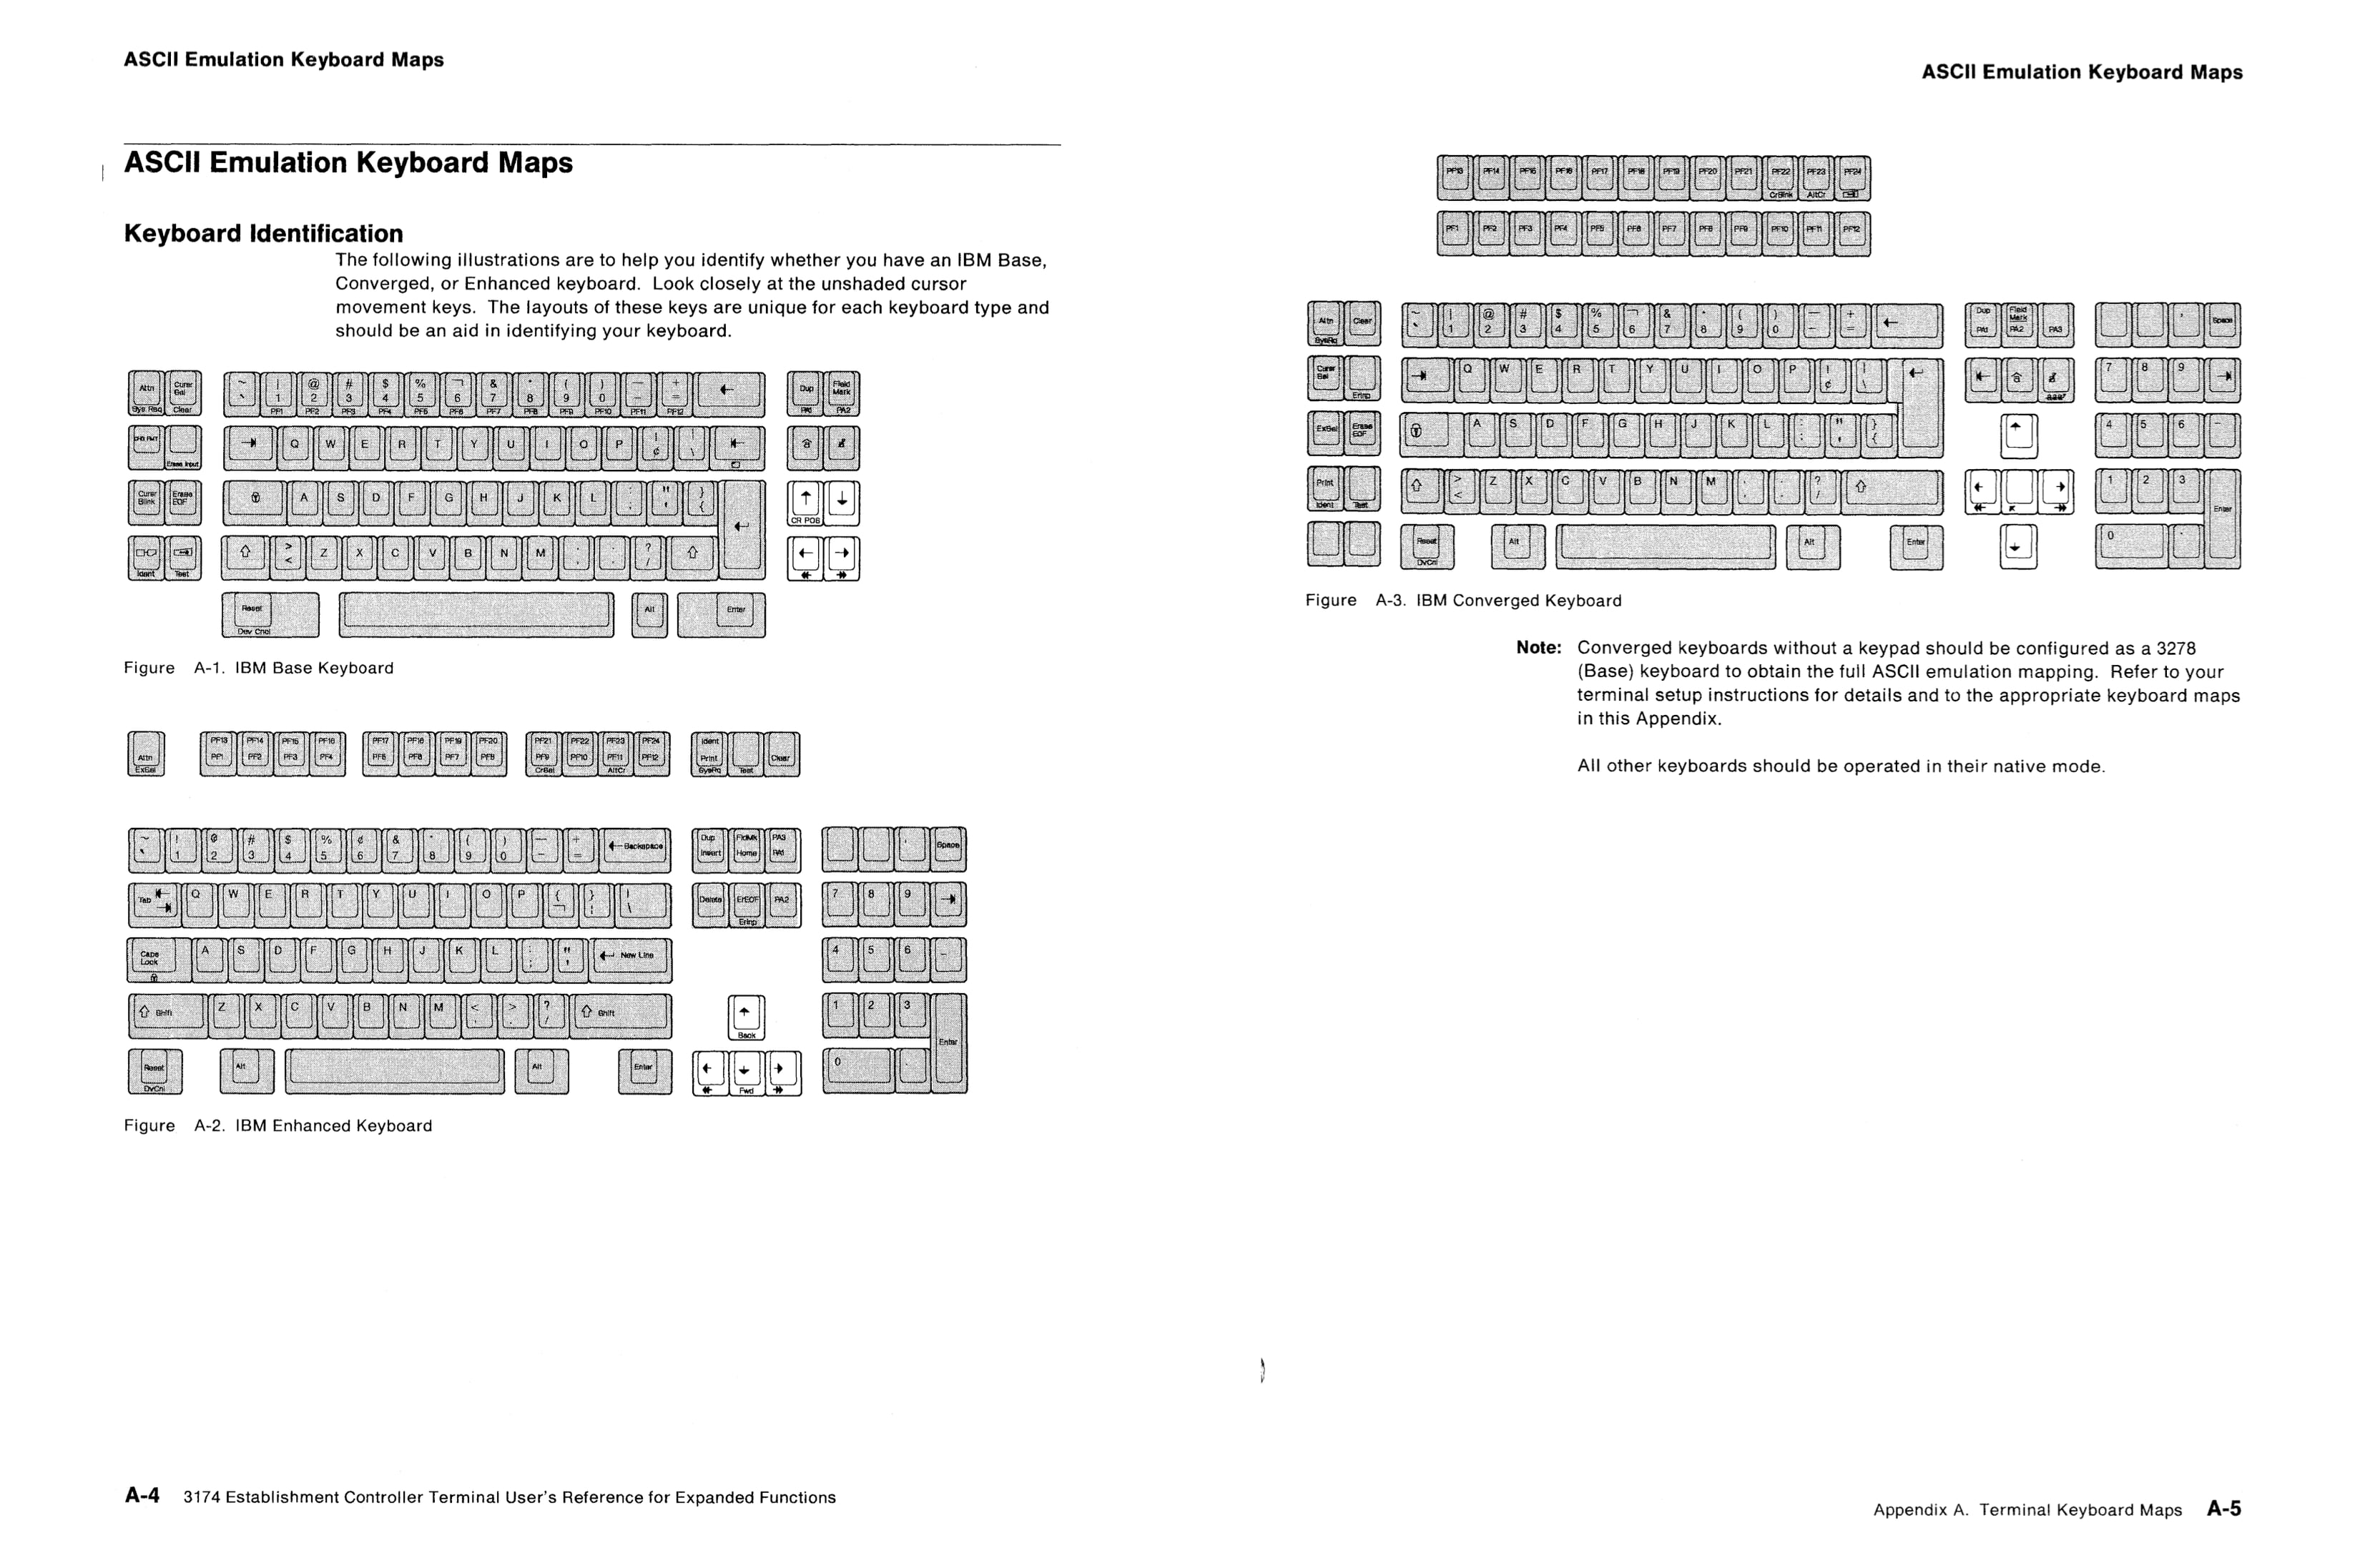 ASCII Emulation Keyboard Maps - Keyboard Identification.jpg